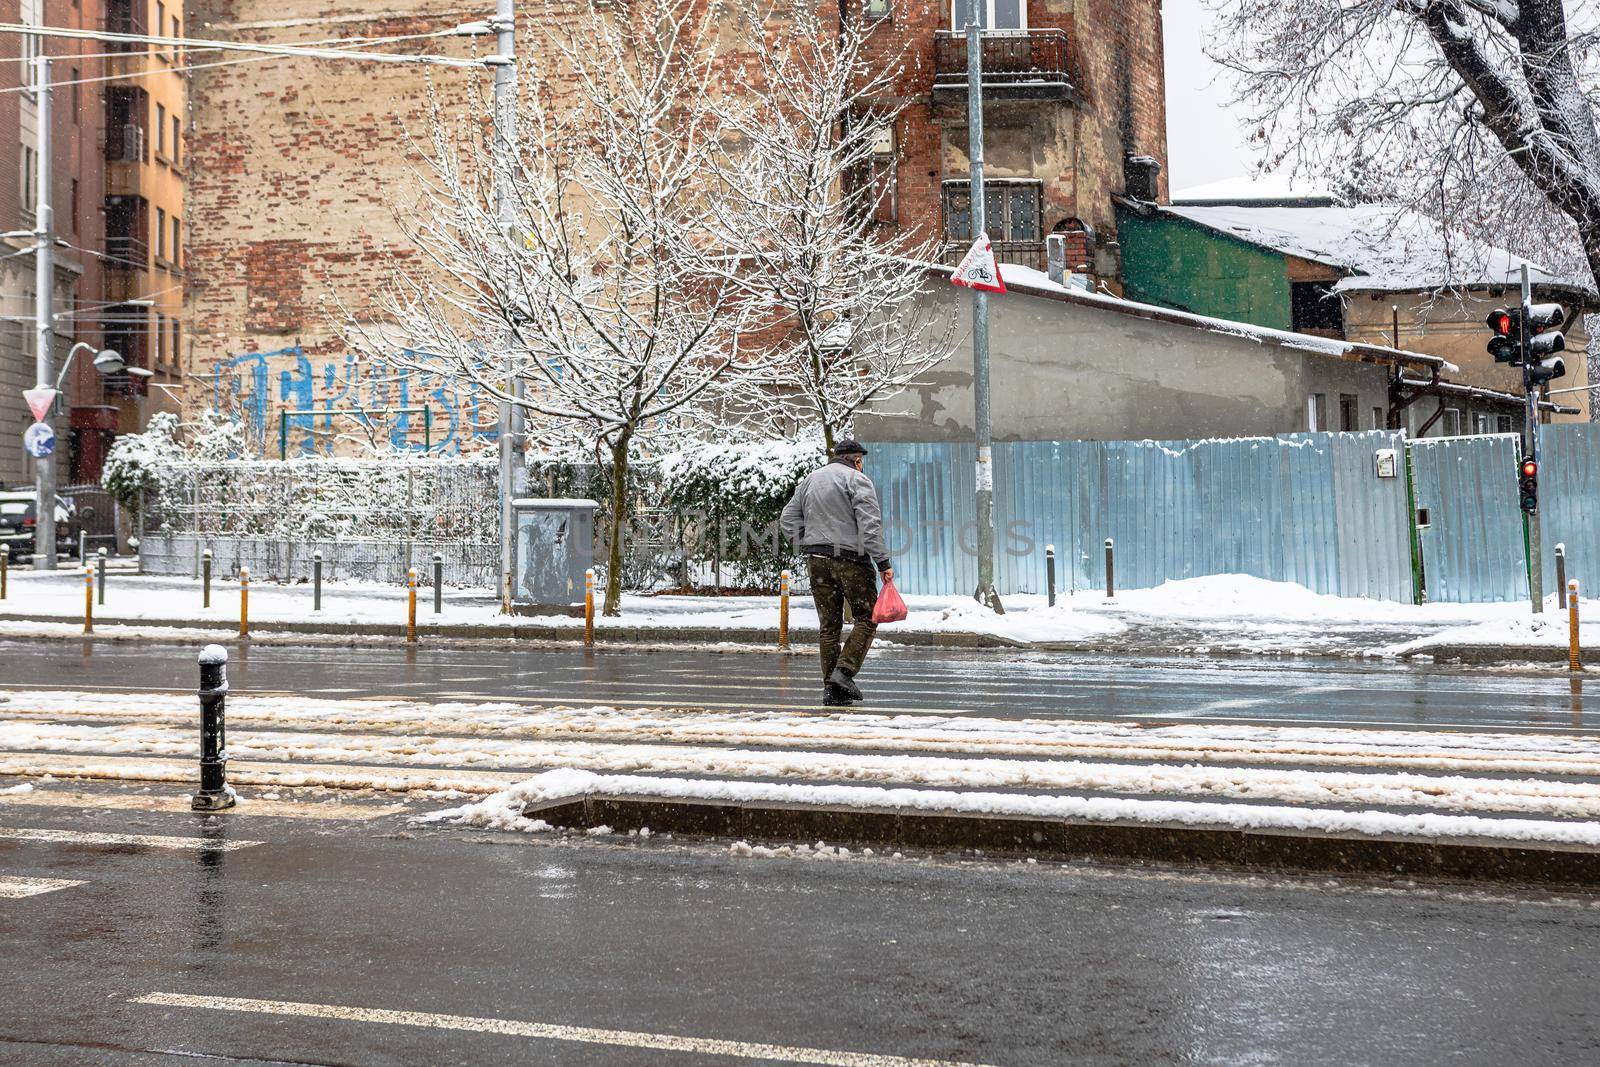 Pedestrian crossing the snowy road, snowy winter day in Bucharest, Romania, 2021